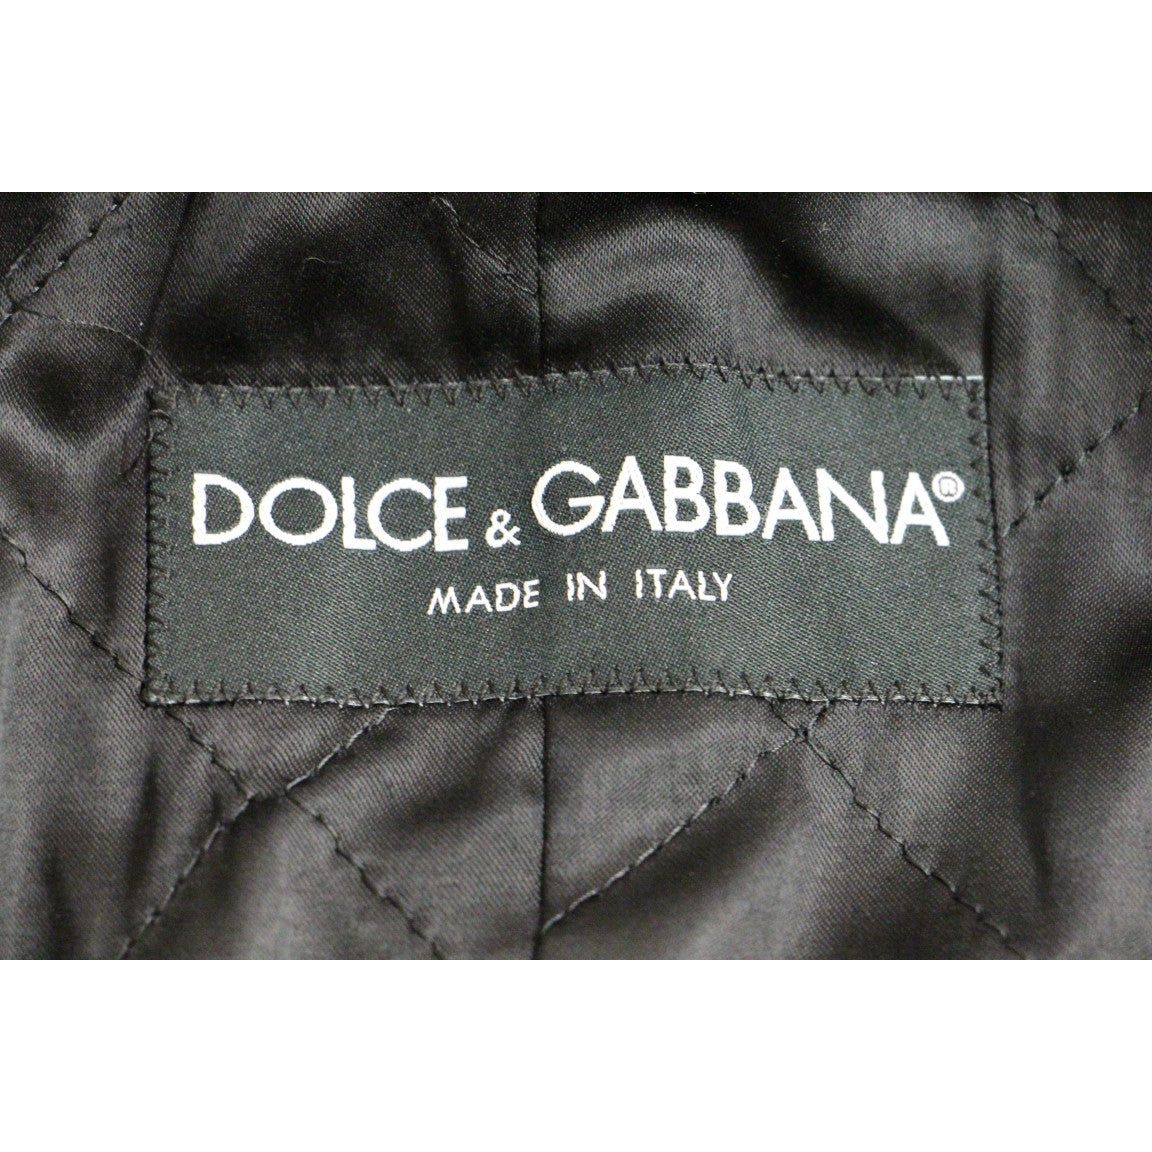 Dolce & Gabbana Sicilia Checkered Wool Blend Coat gray-double-breasted-coat-jacket Coats & Jackets 53557-gray-double-breasted-coat-jacket-6.jpg